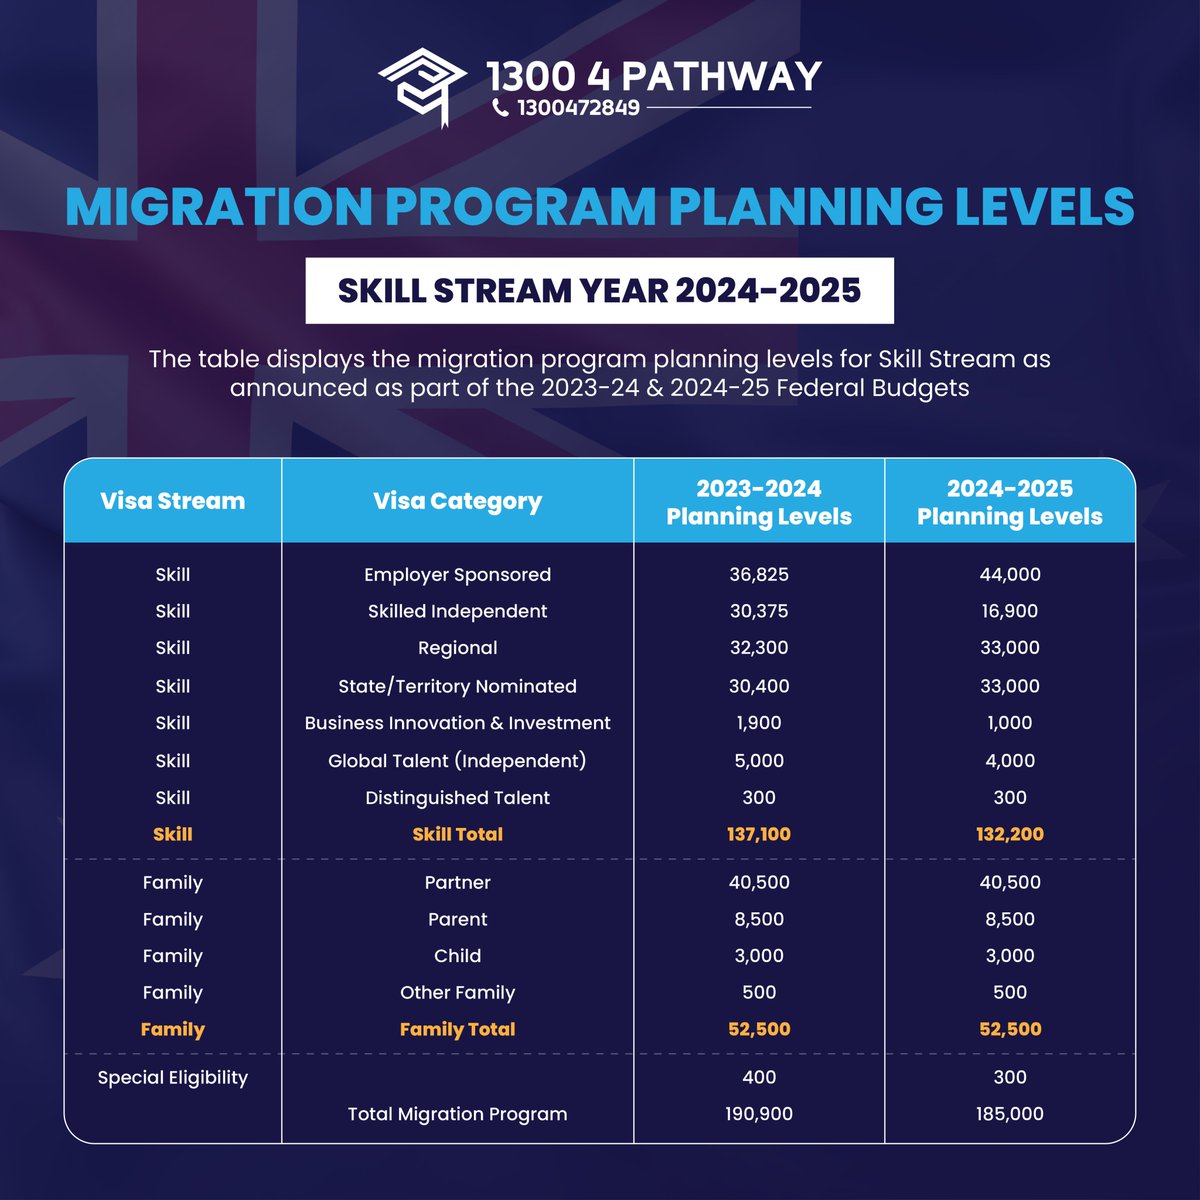 📣Migration Program 2024-25 Planning Levels Announced #migrationprogram #migration2024 #workinaustralia #skillmigration #migrationservicesinmelbourne #migrationservices #pr #prinaustralia #partnervisa #Parentvisa #childvisa